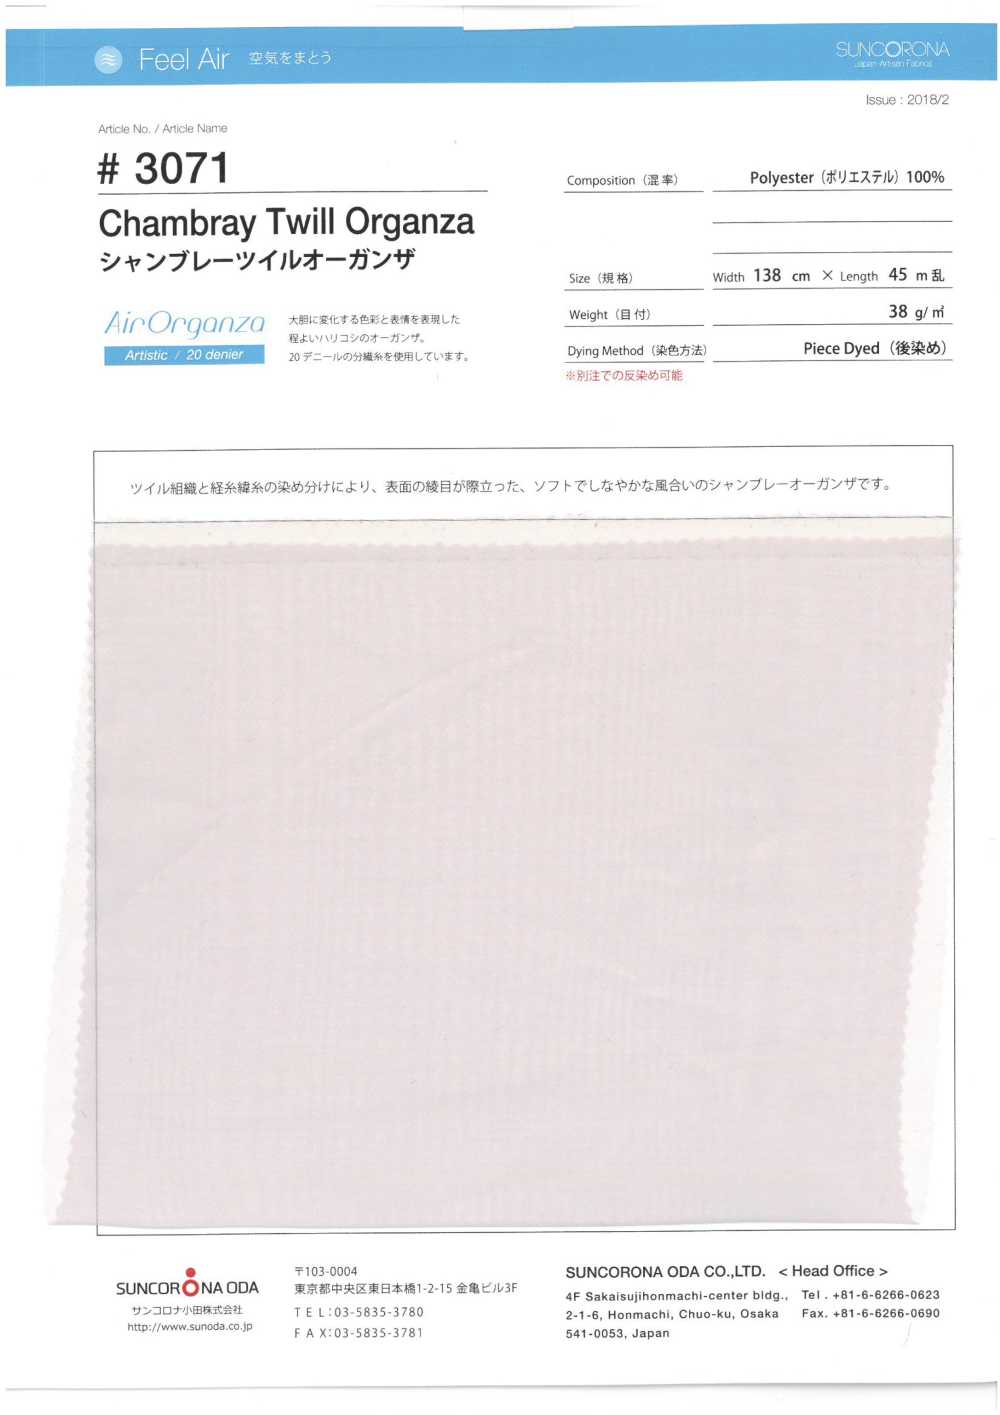 3071 Chambray-Twill-Organza[Textilgewebe] Suncorona Oda